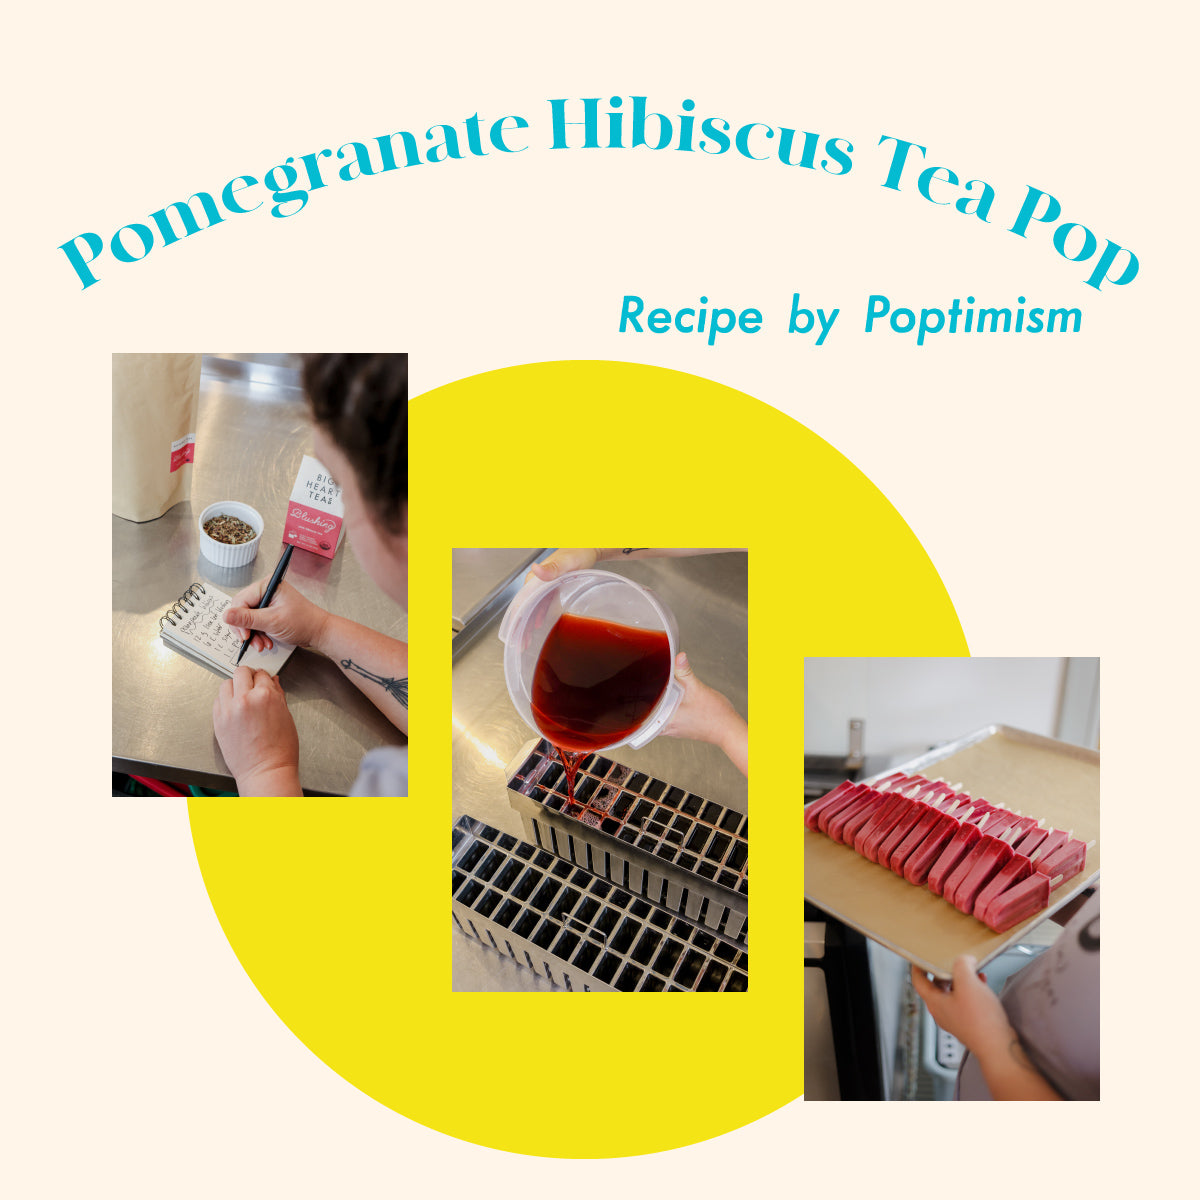 Pomegranate Hibiscus Ice Pop